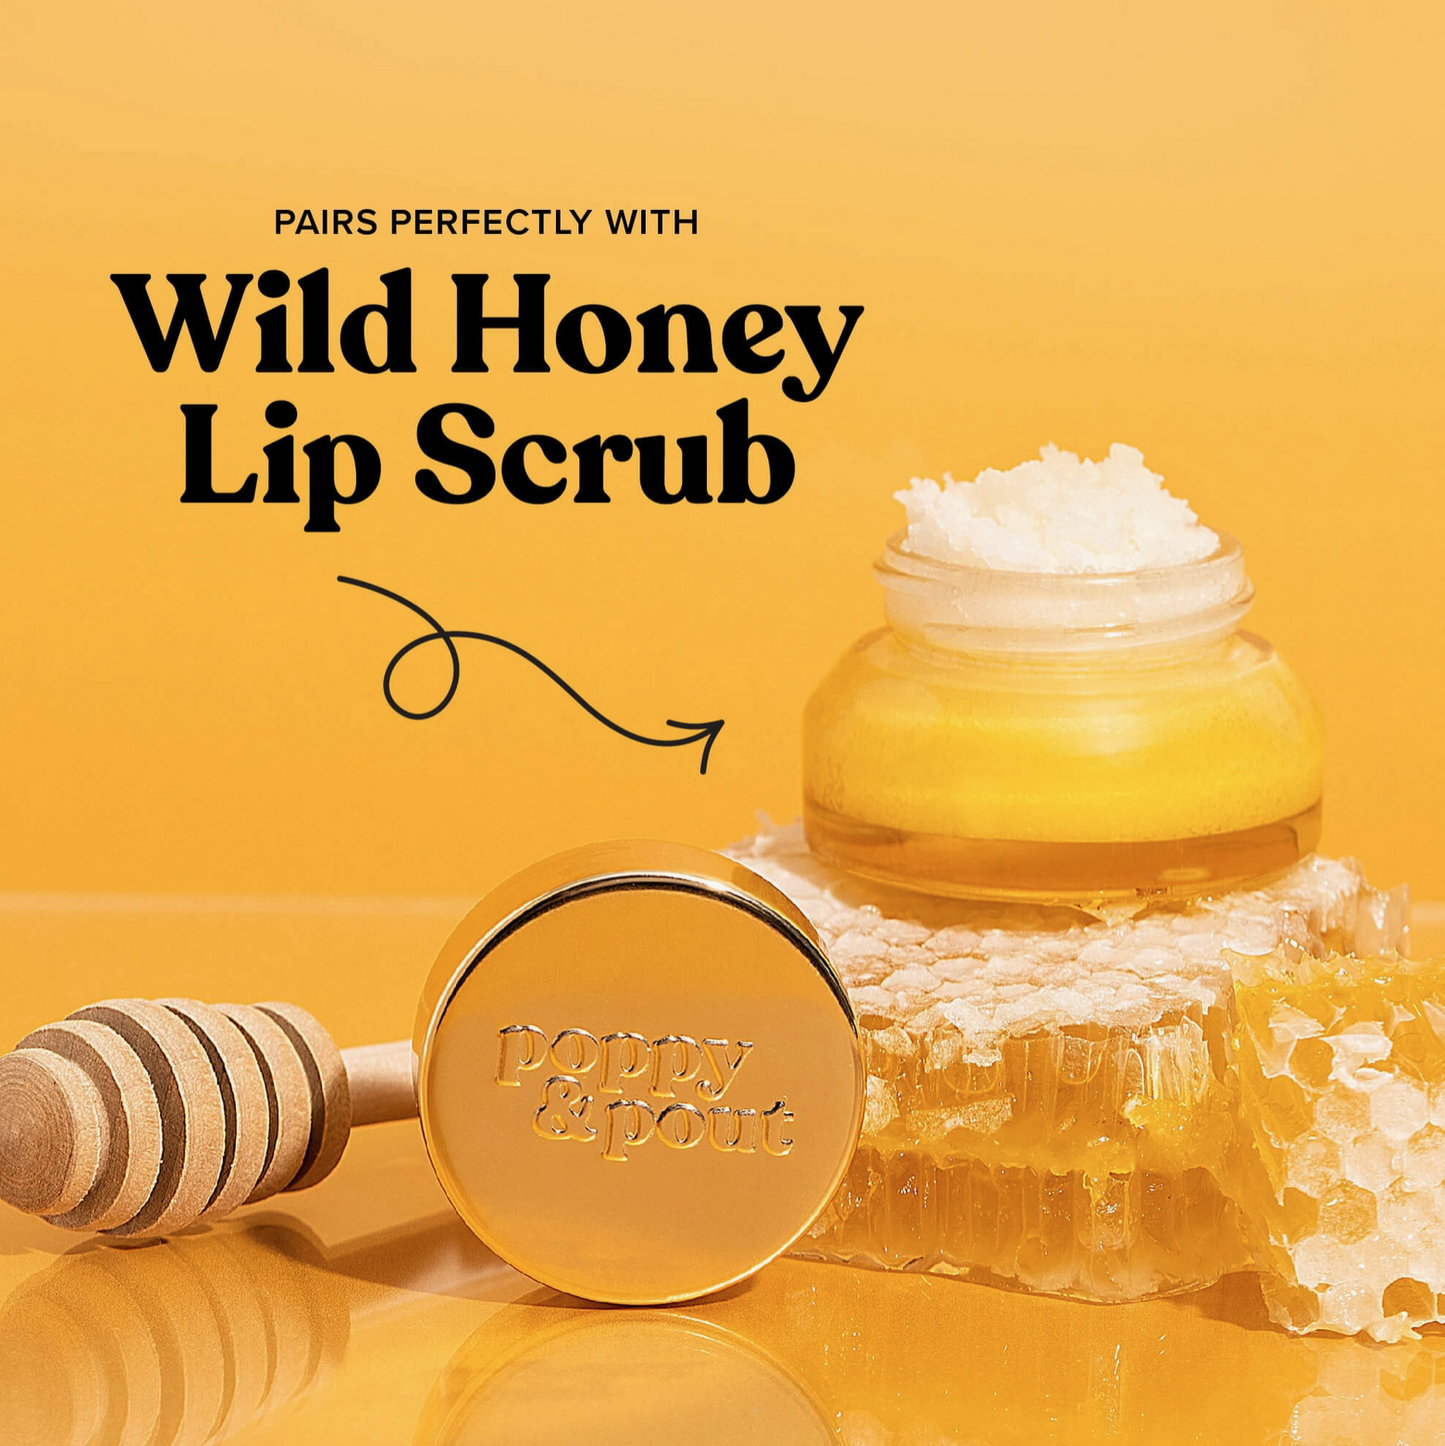 Poppy & Pout Hydrating Wild Honey Lip Balm